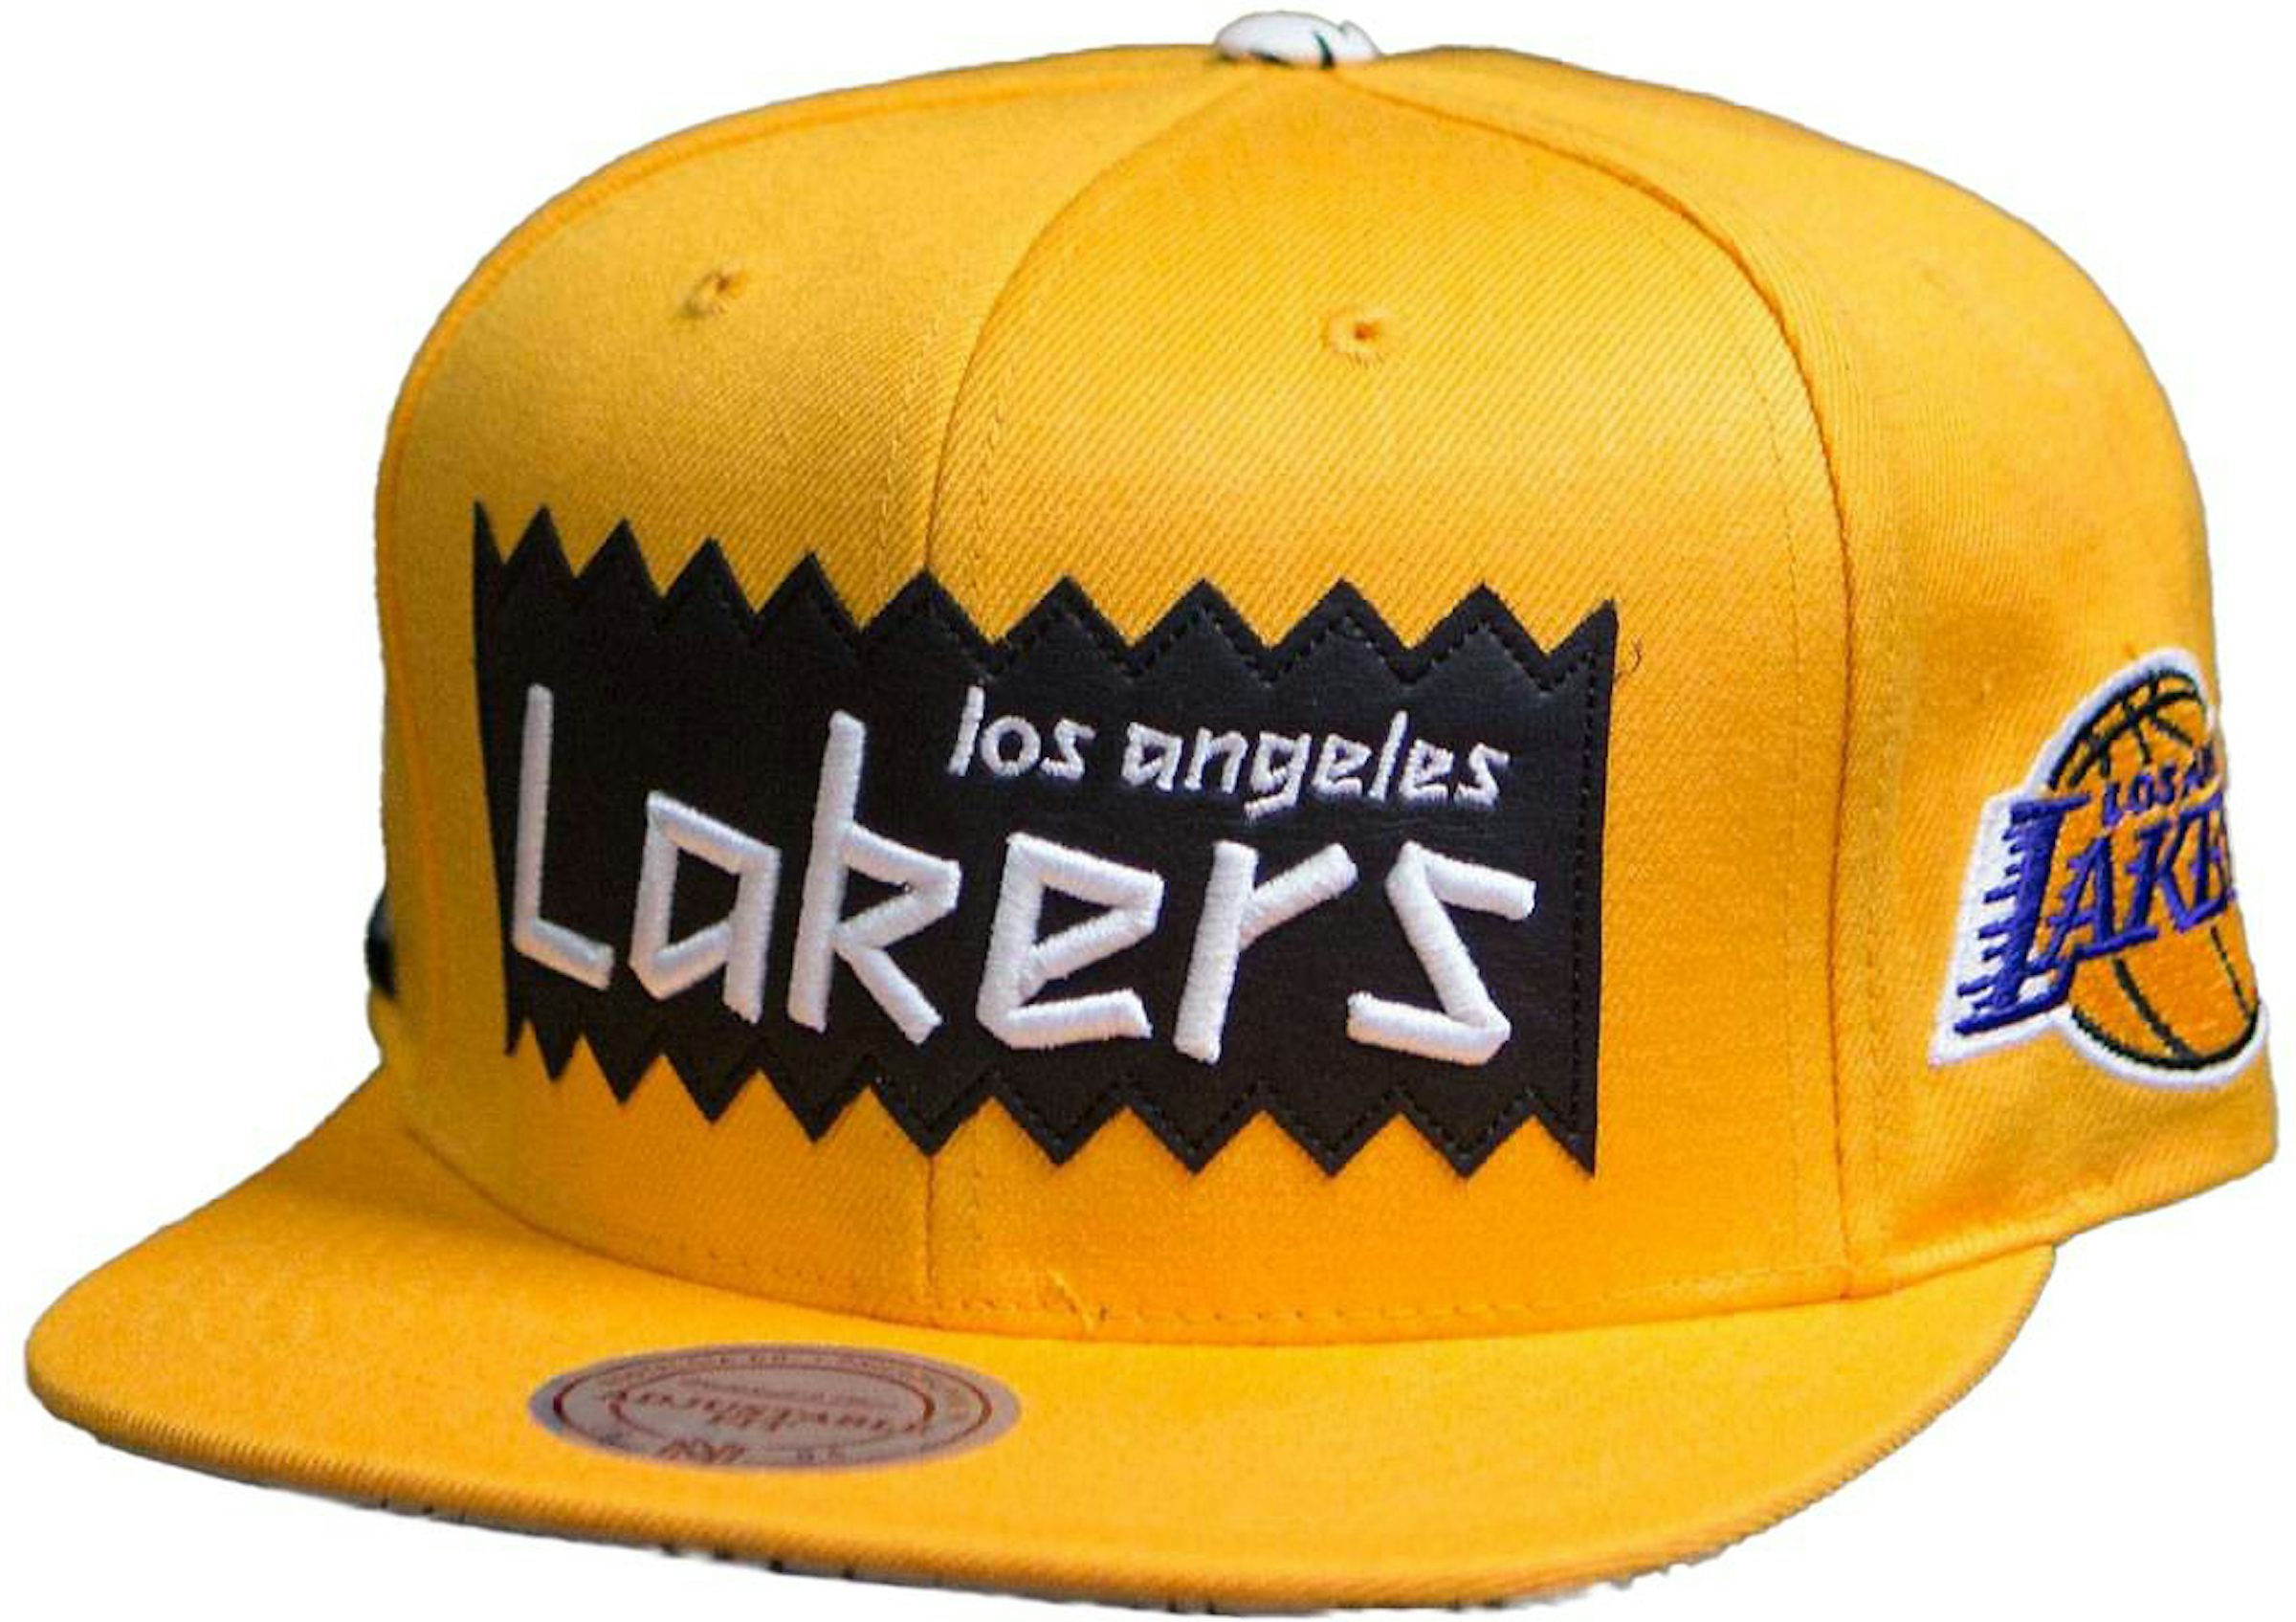 New Era Clippers Awake Snapback Hat